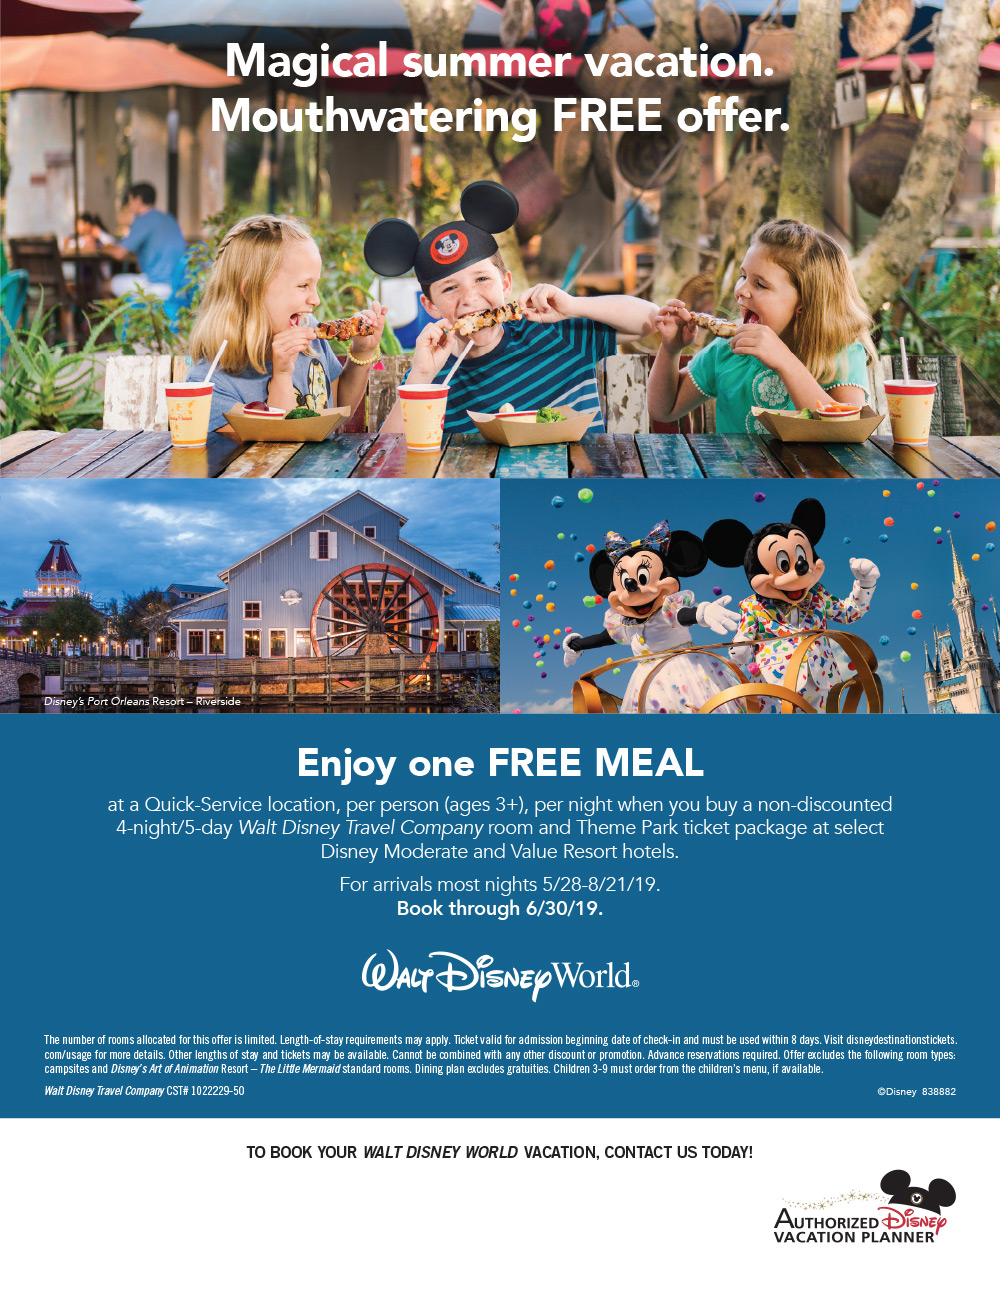 Walt Disney World Free Meal Deal